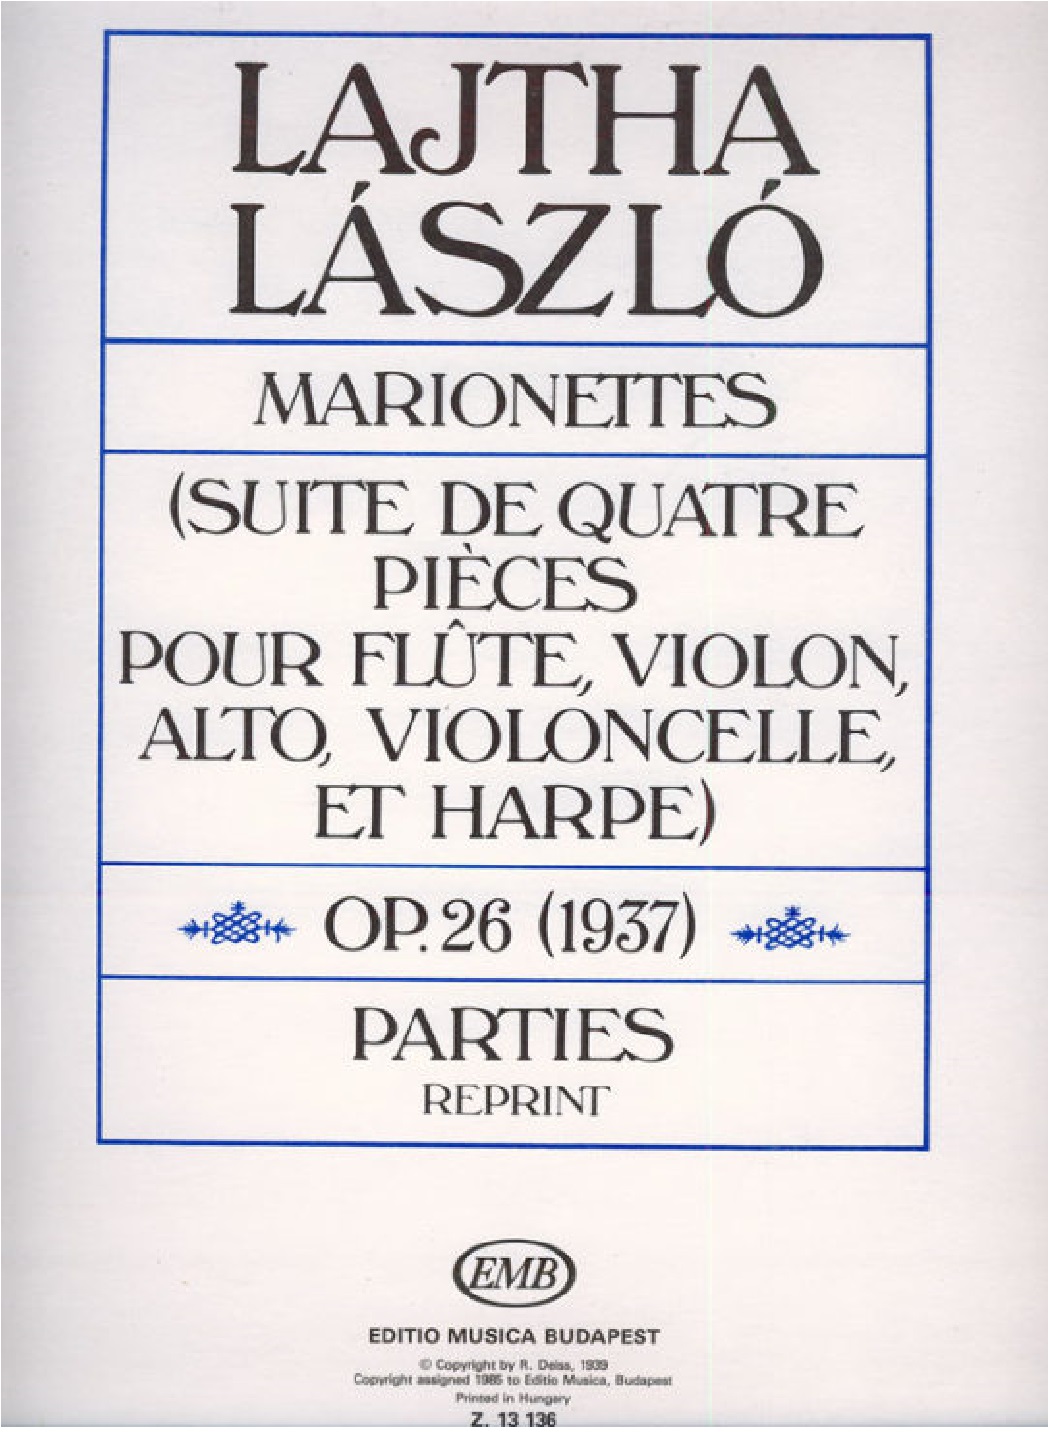 Lajtha László - MARIONETTES OP.26 (1937) PARTIES REPRINT